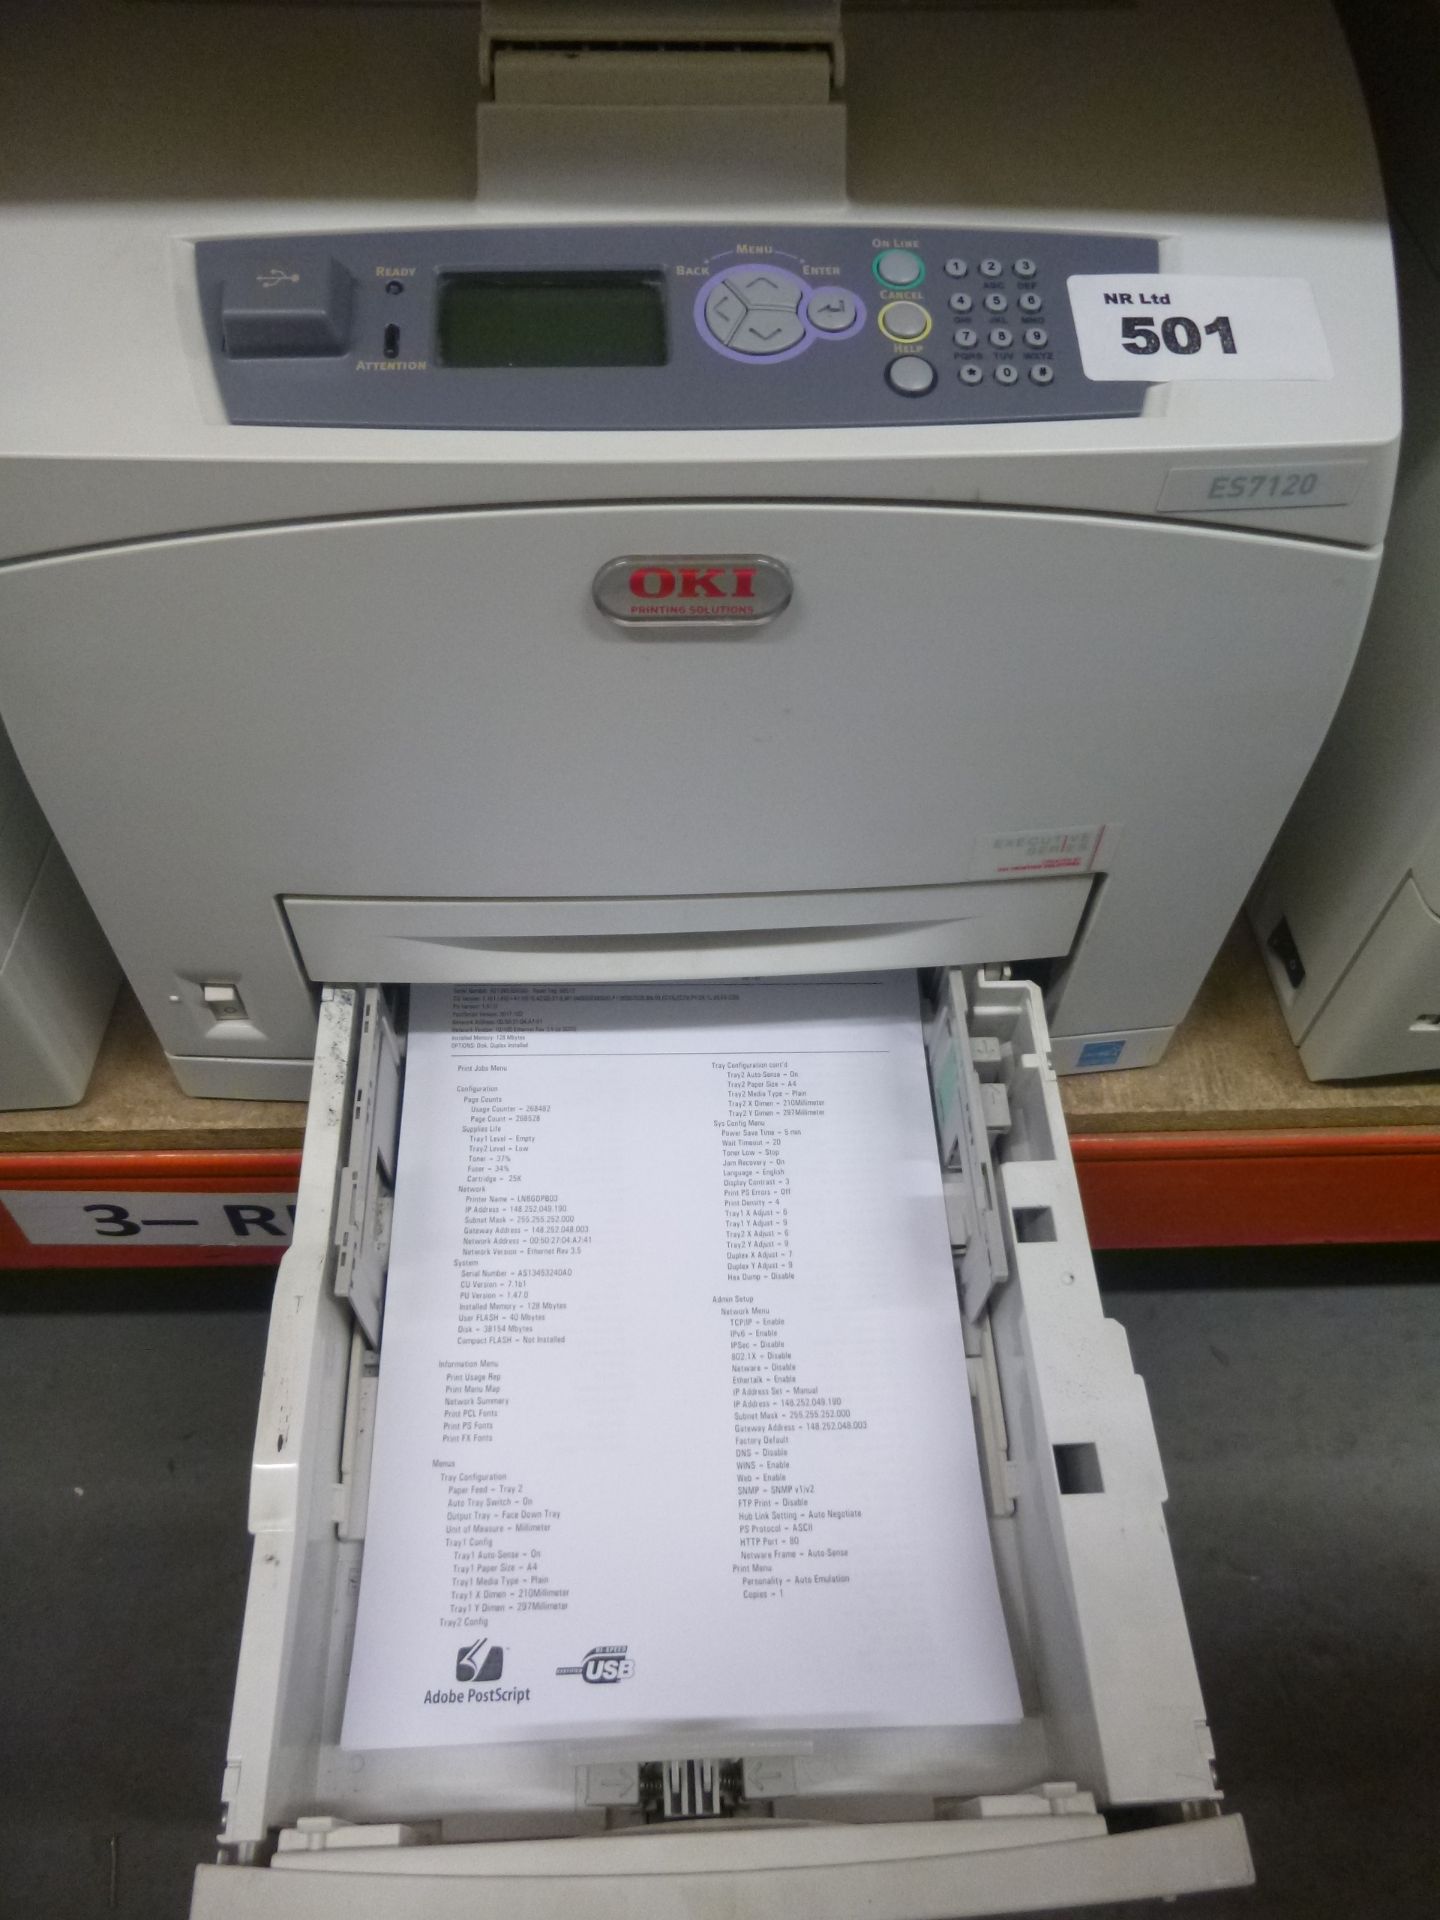 OKI ES7120 NETWORK Laser printer with test print - Image 2 of 2